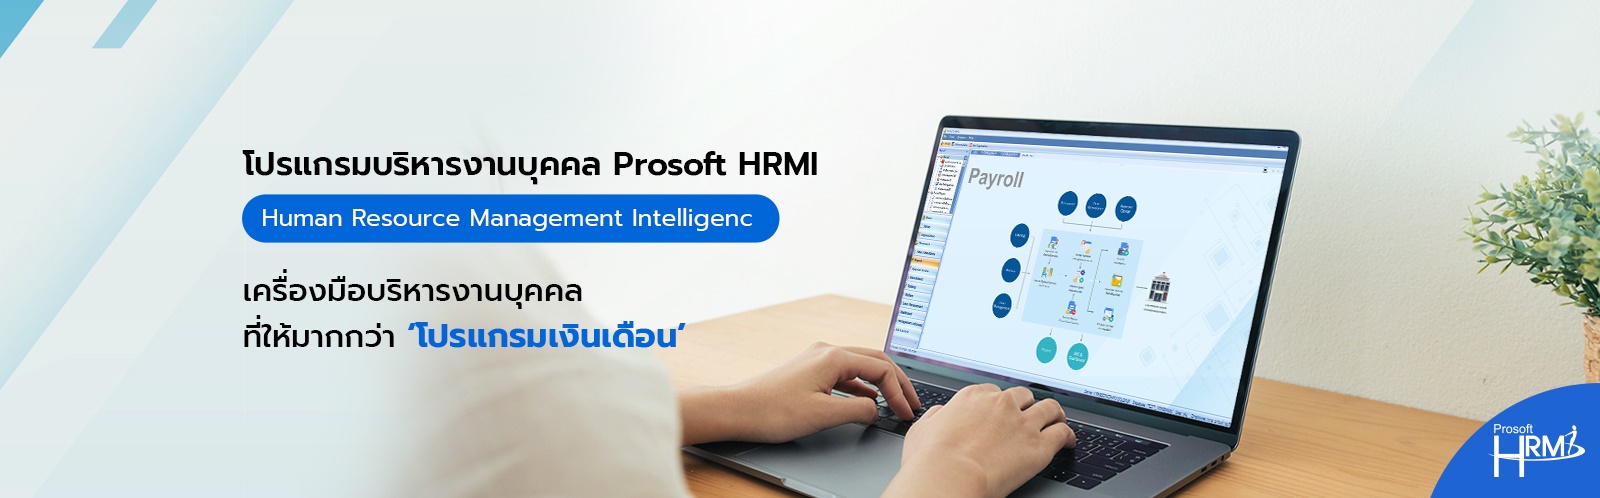 Prosoft HRMI โปรแกรมบริหารงานบุคคล